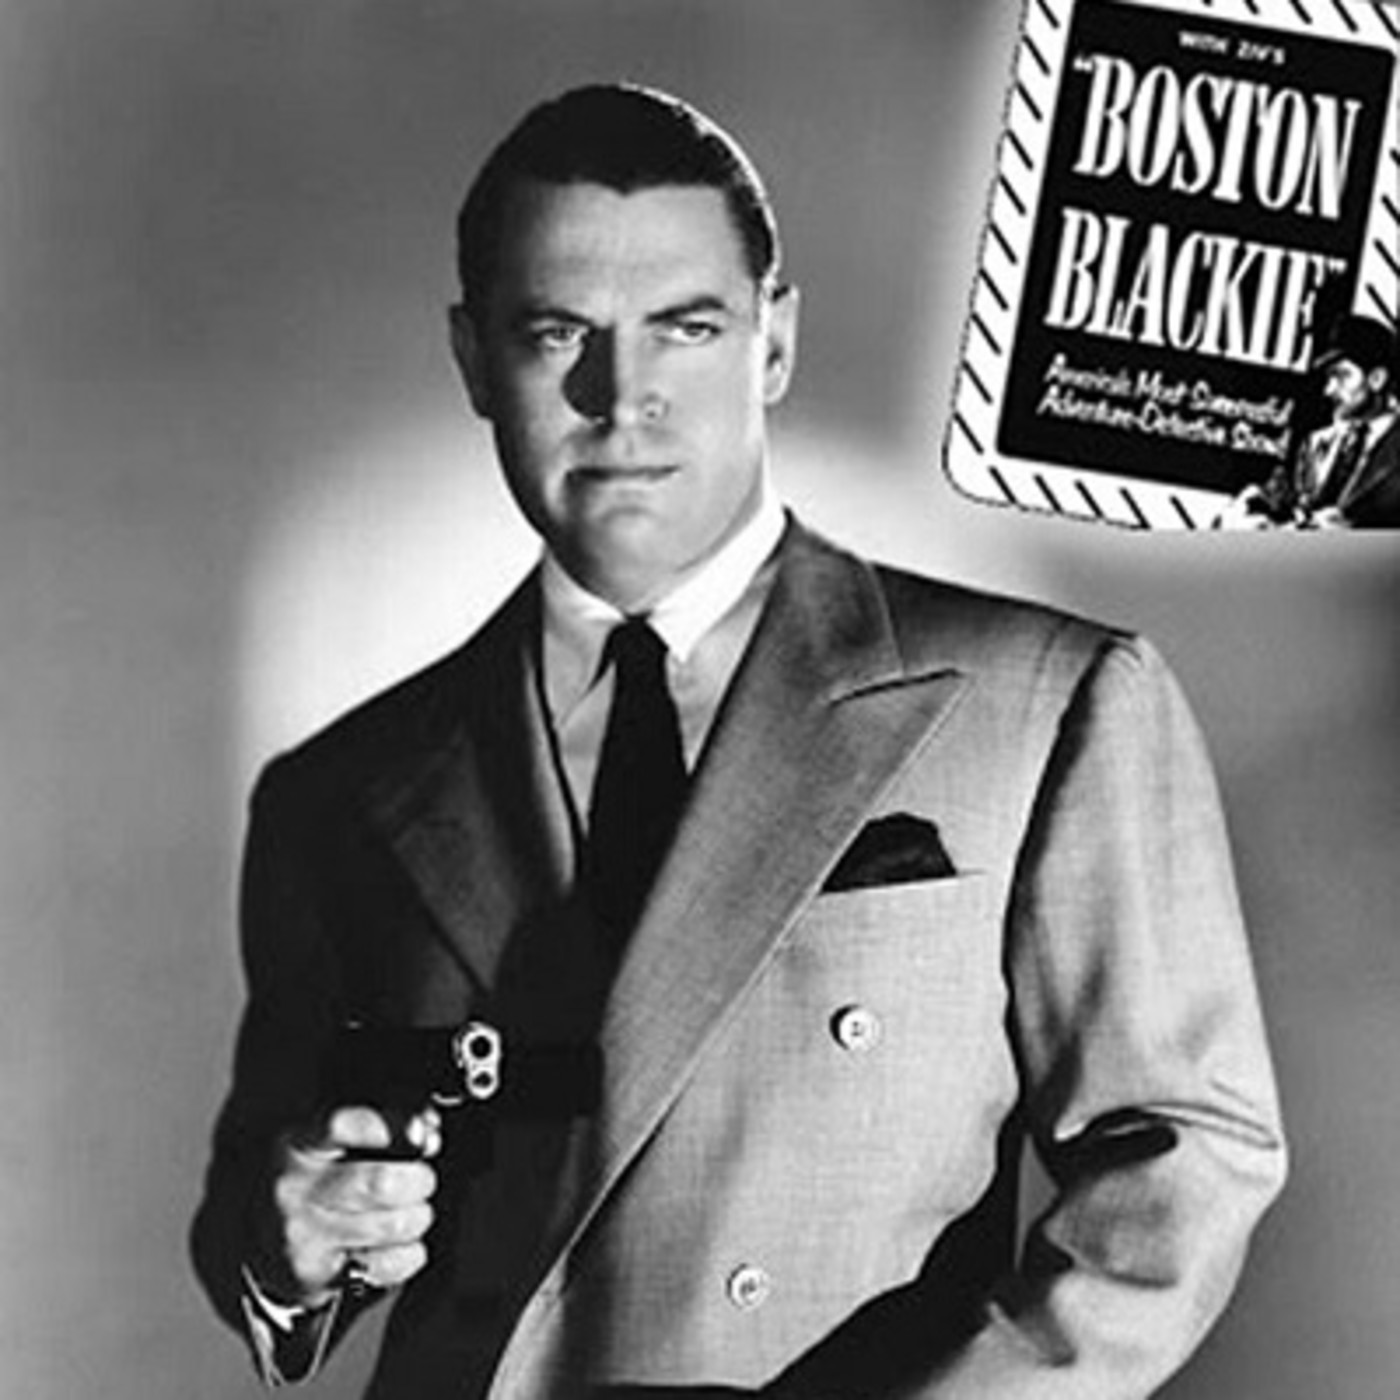 Boston Blackie - Imperial Oil Company Racket - 227